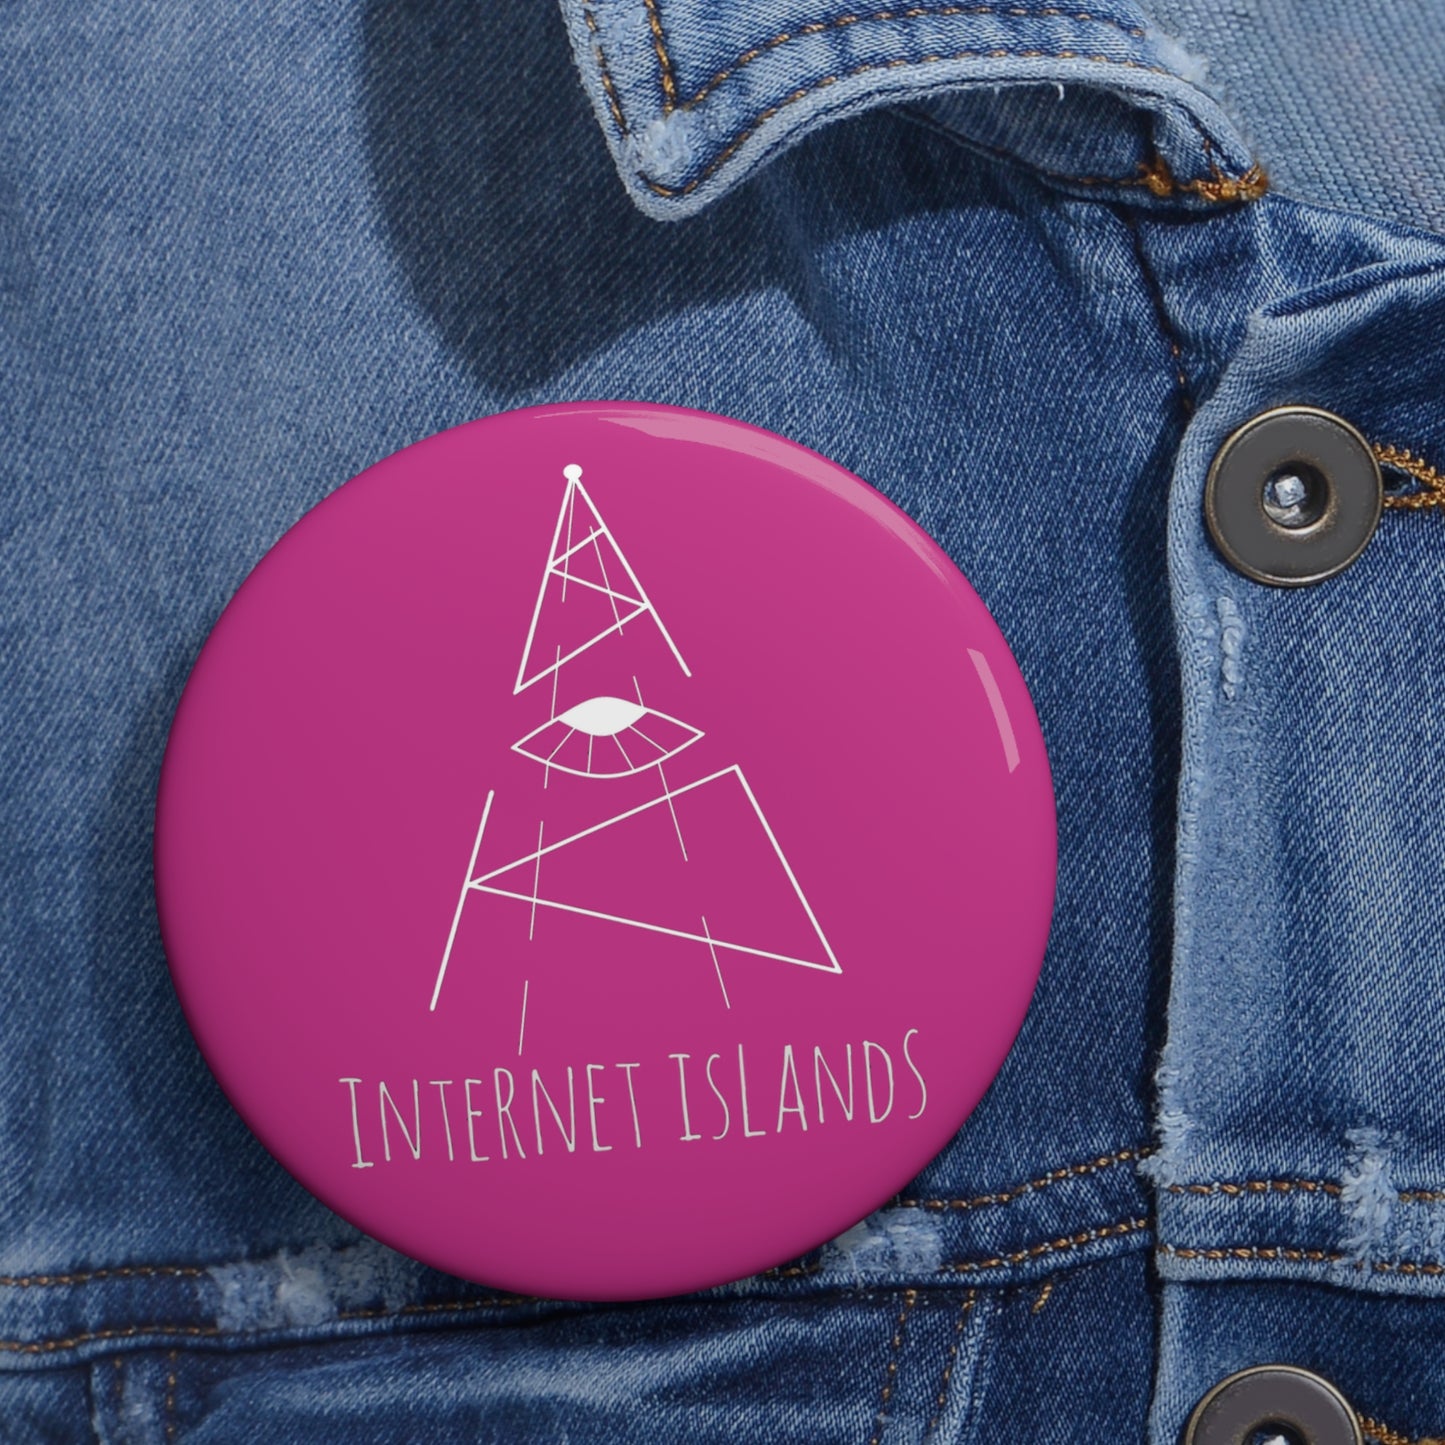 Internet Islands Pin - Button (PINK)